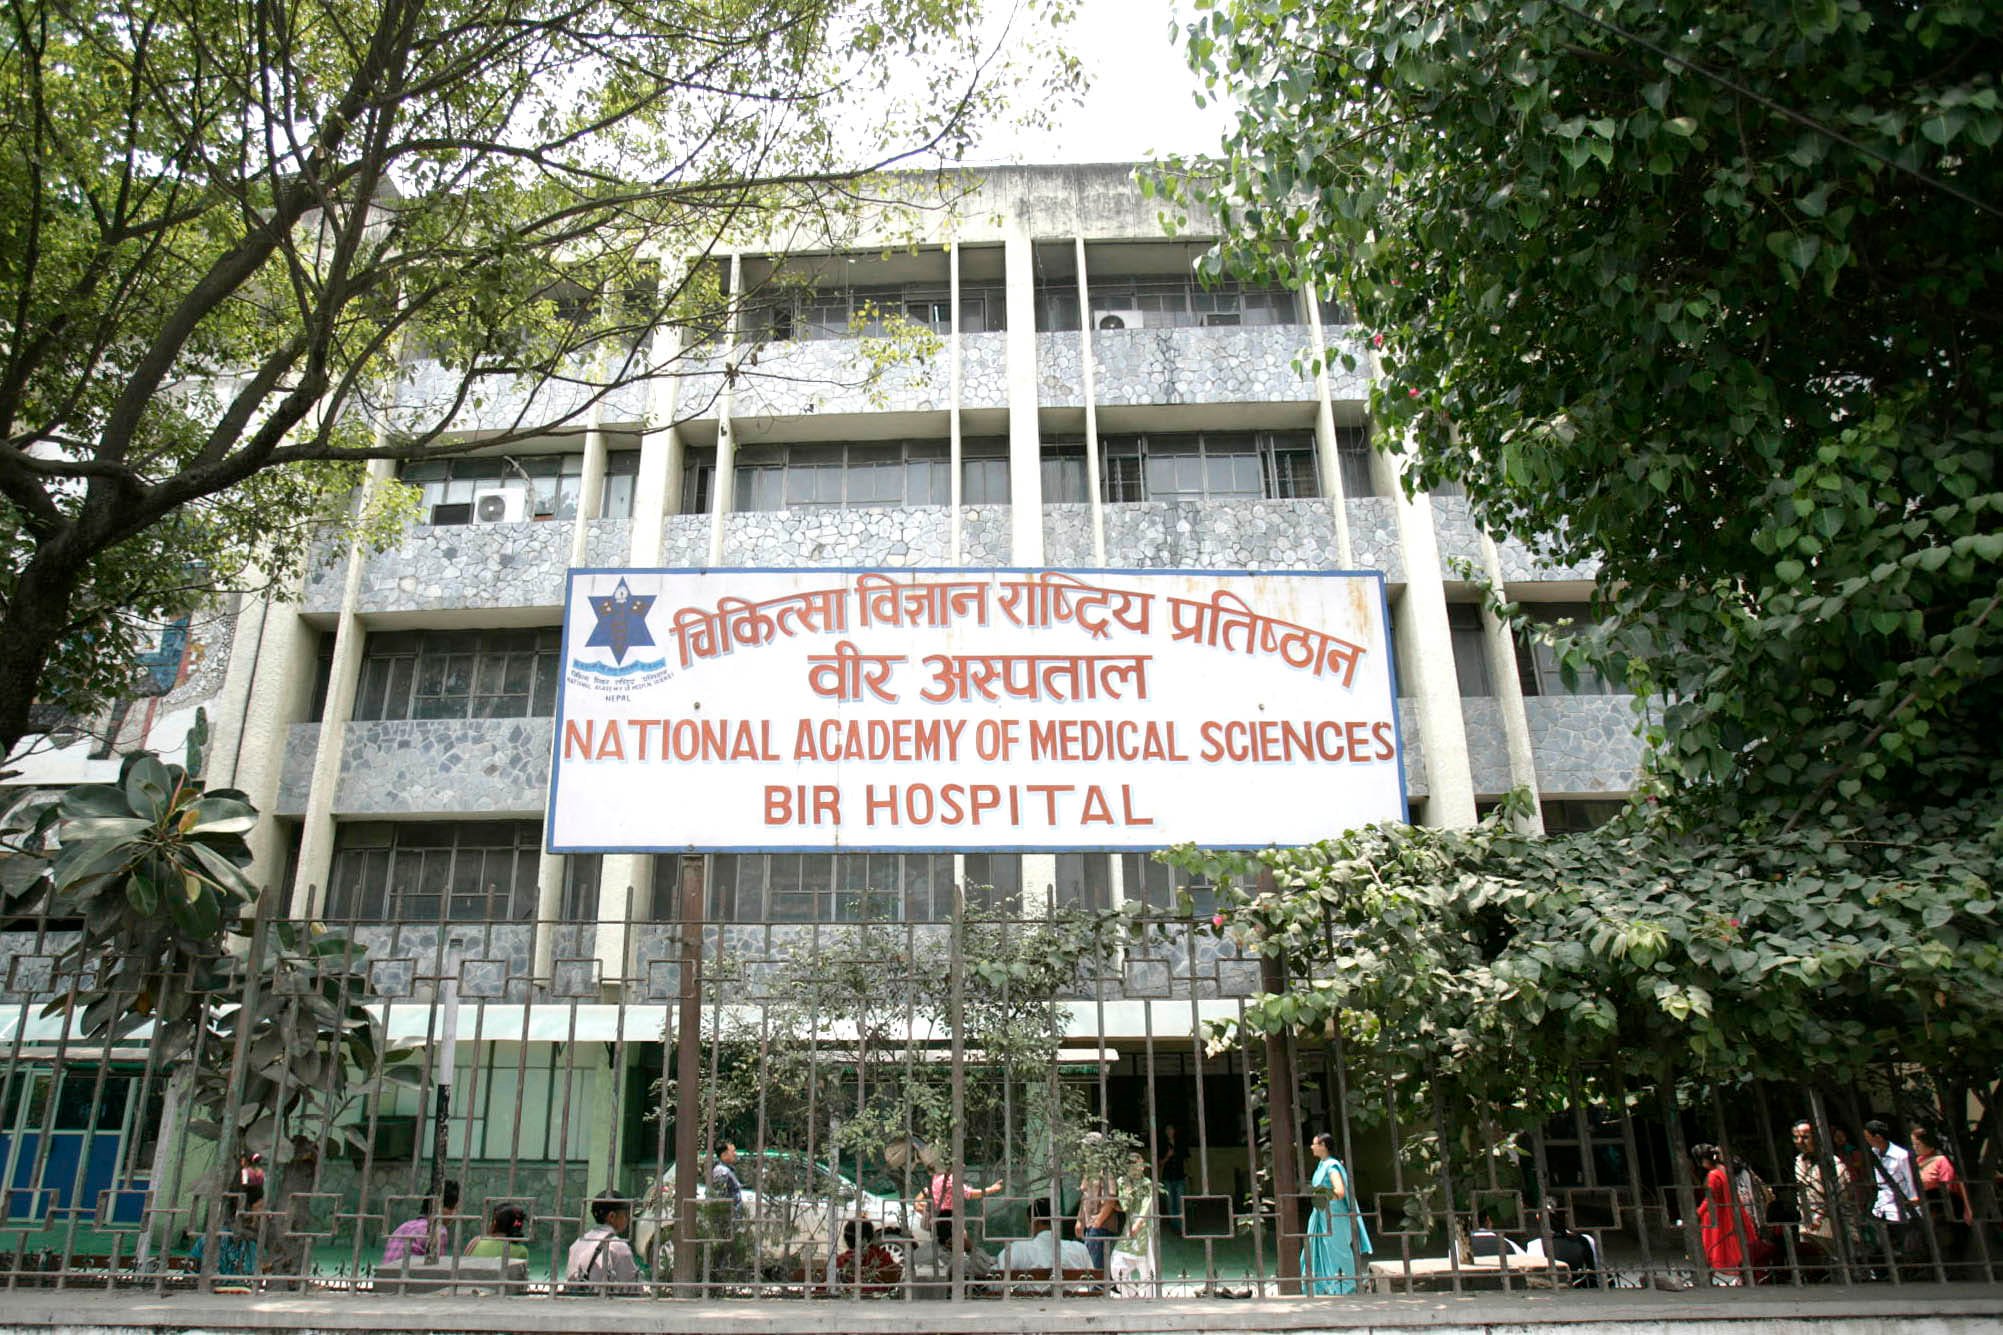 National Academy of Medical Sciences (NAMS) Bir Hospital